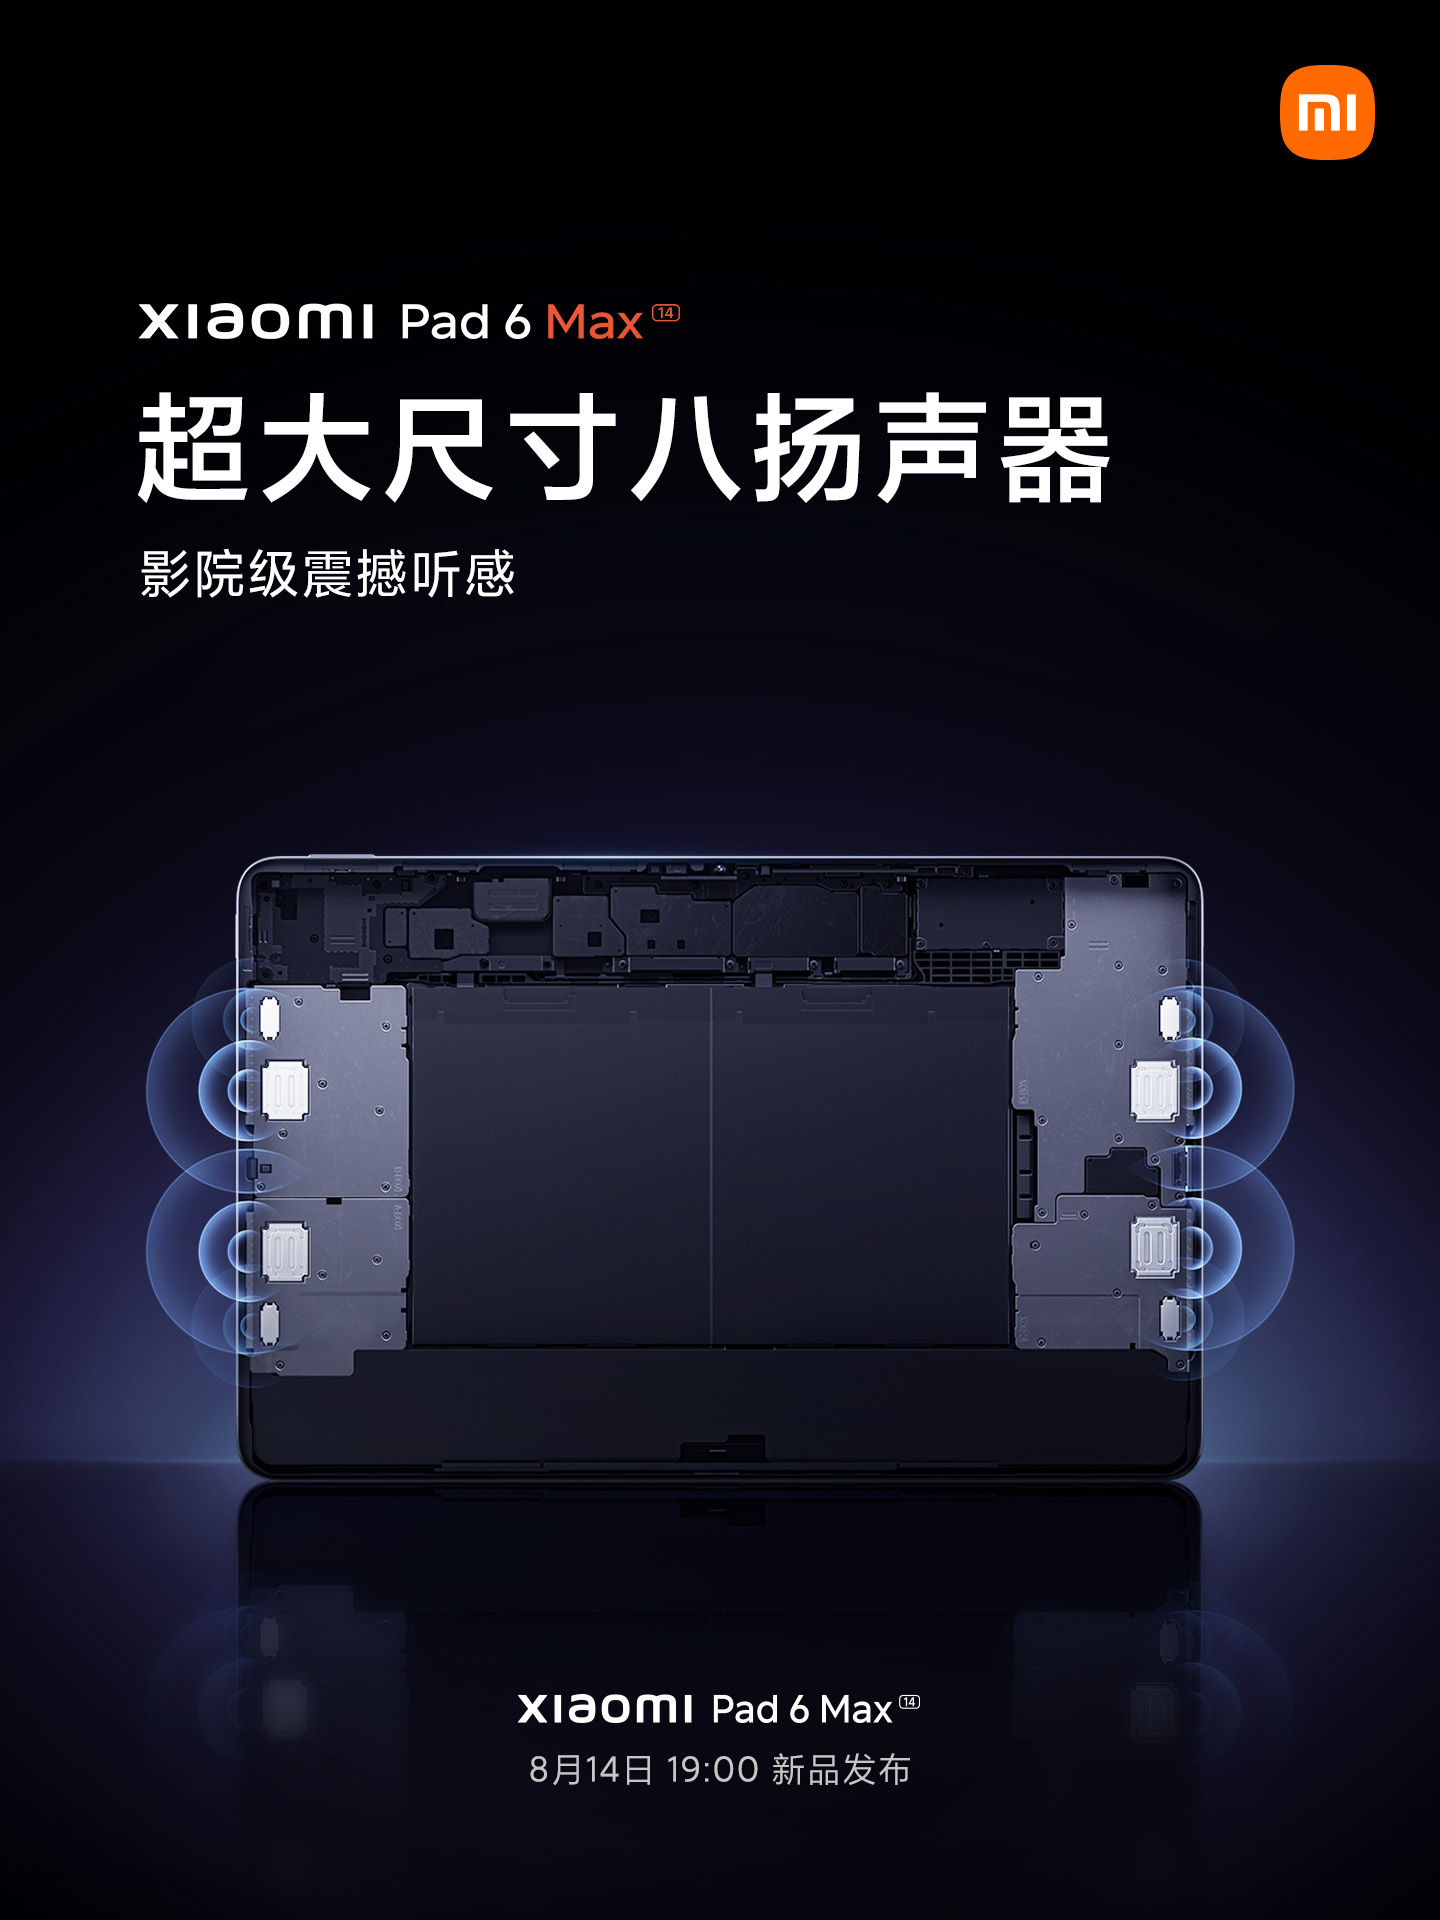  Новые секреты планшета Xiaomi Pad 6 Max Xiaomi  - i_razvlechsa_i_porabotat_novye_sekrety_xiaomi_pad_6_max_1